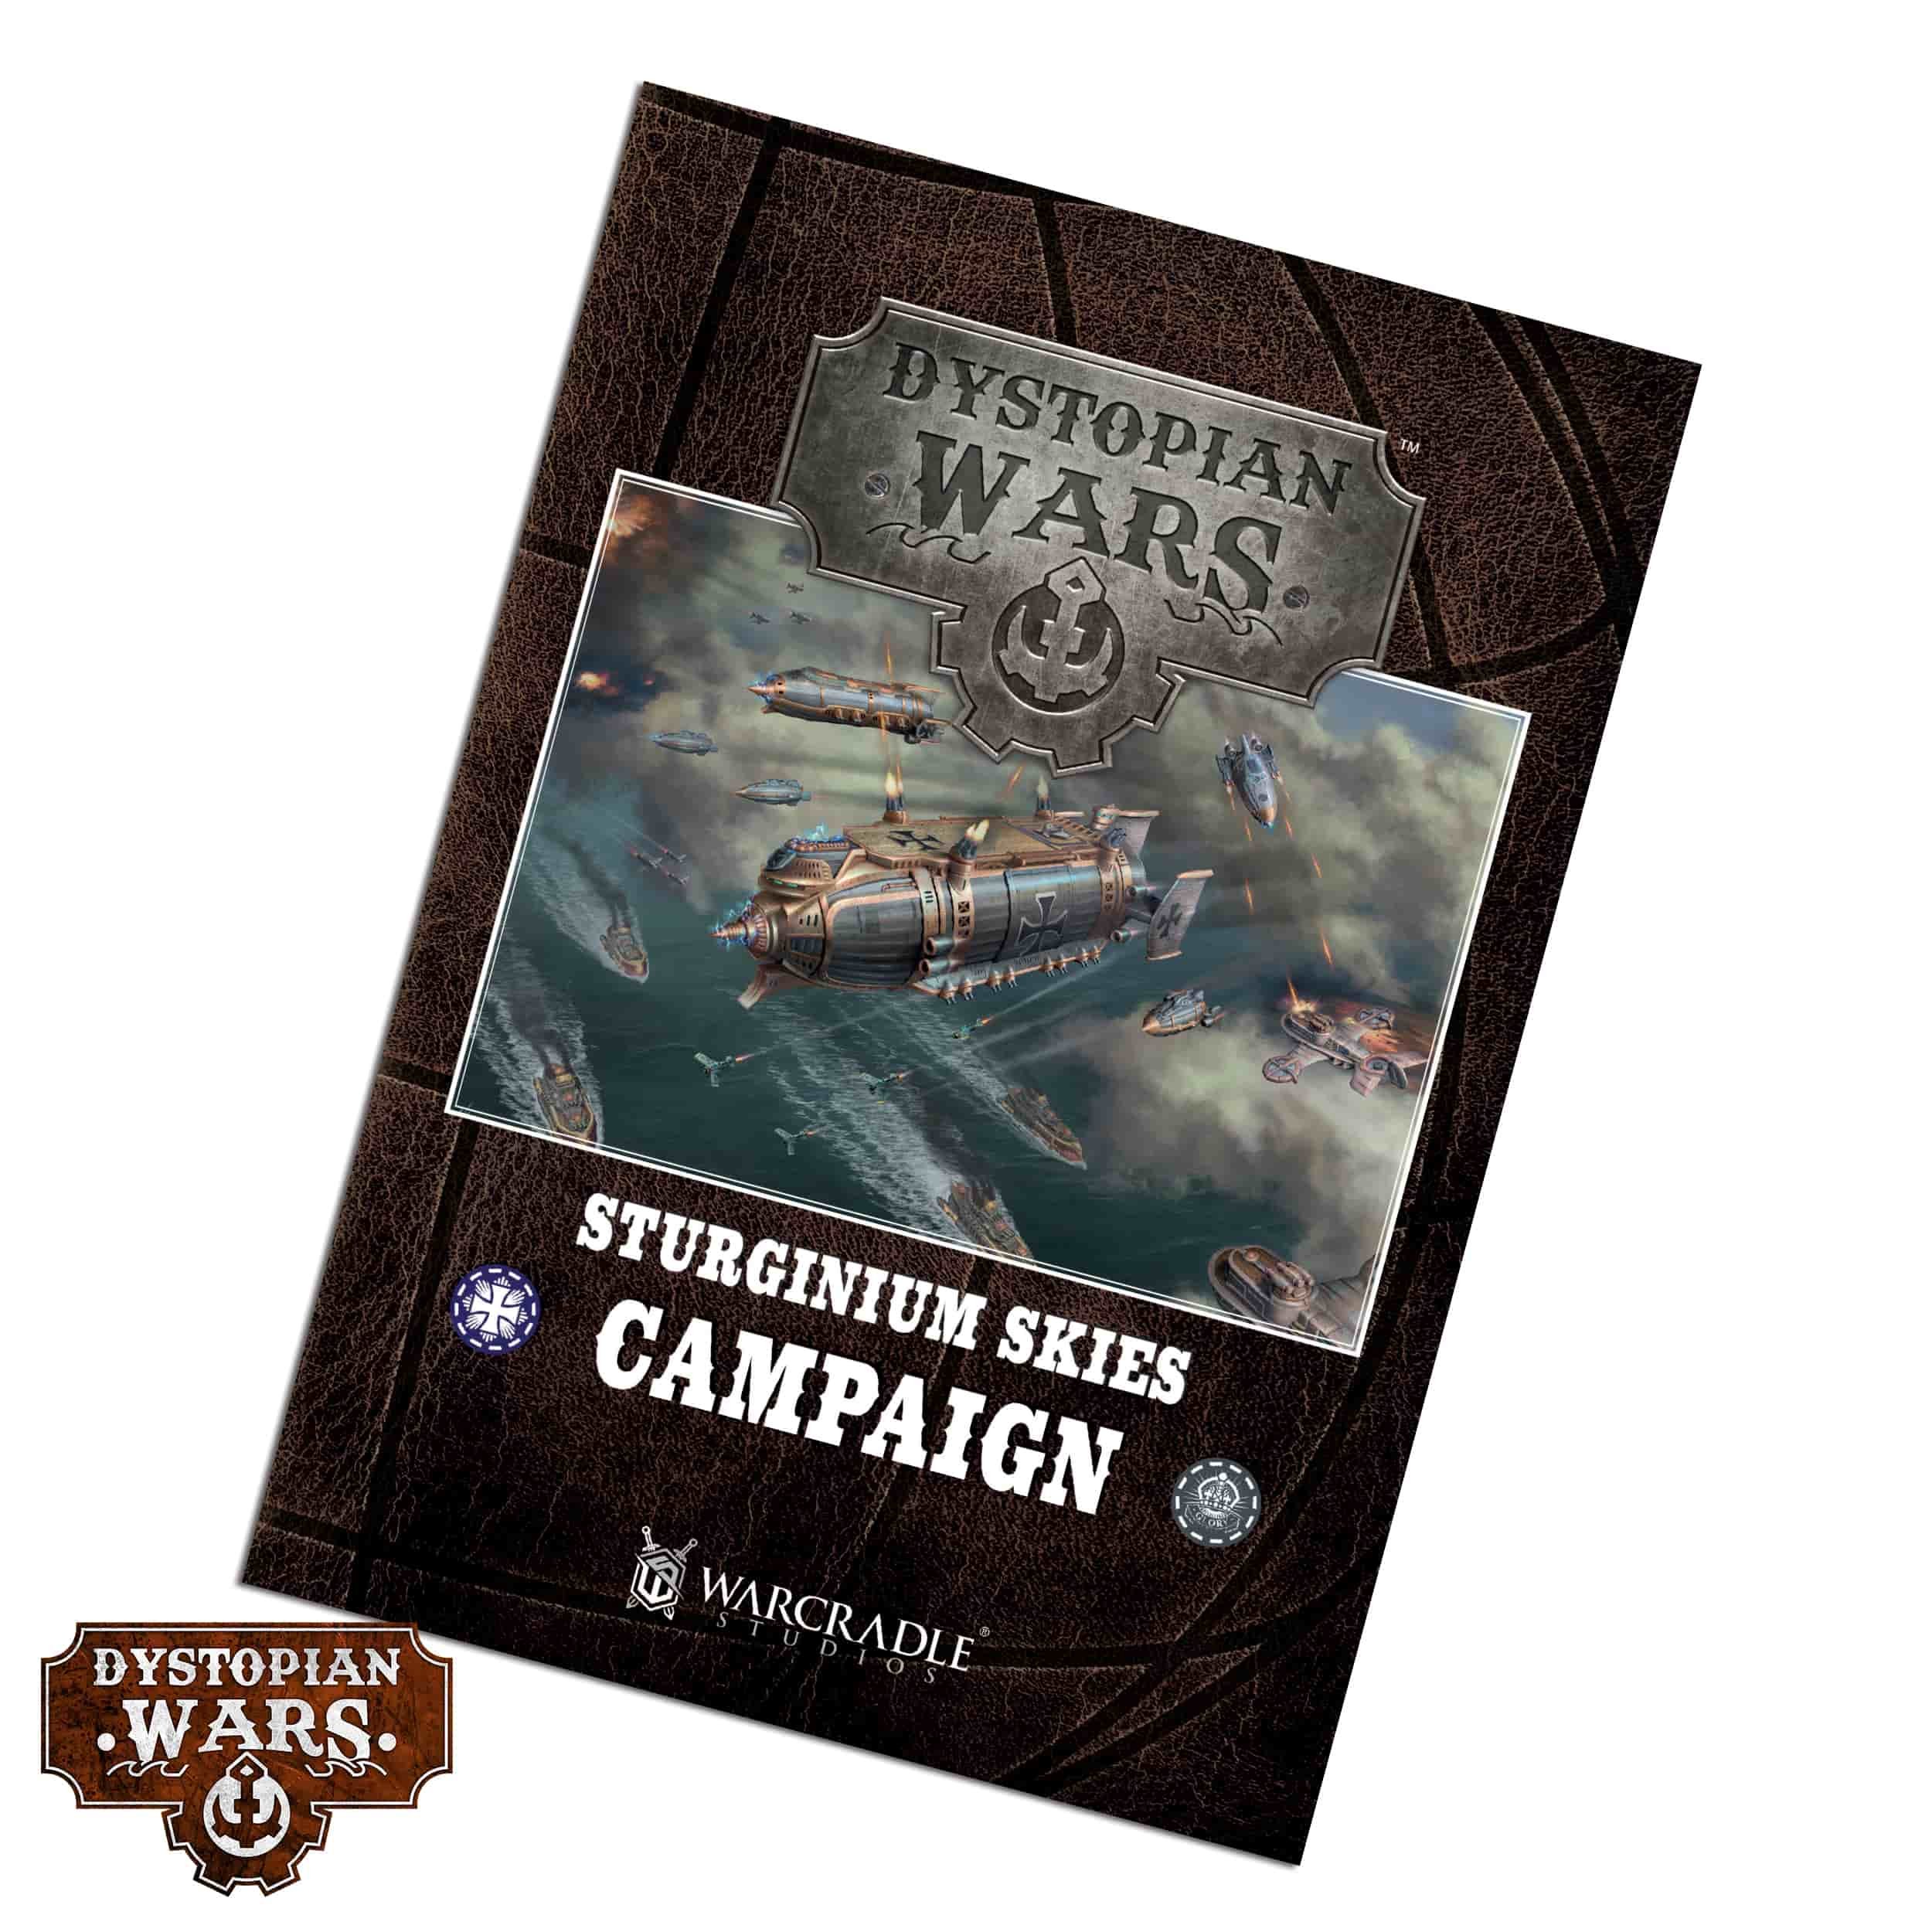 Sturginium Skies Campaign - Dystopian Wars